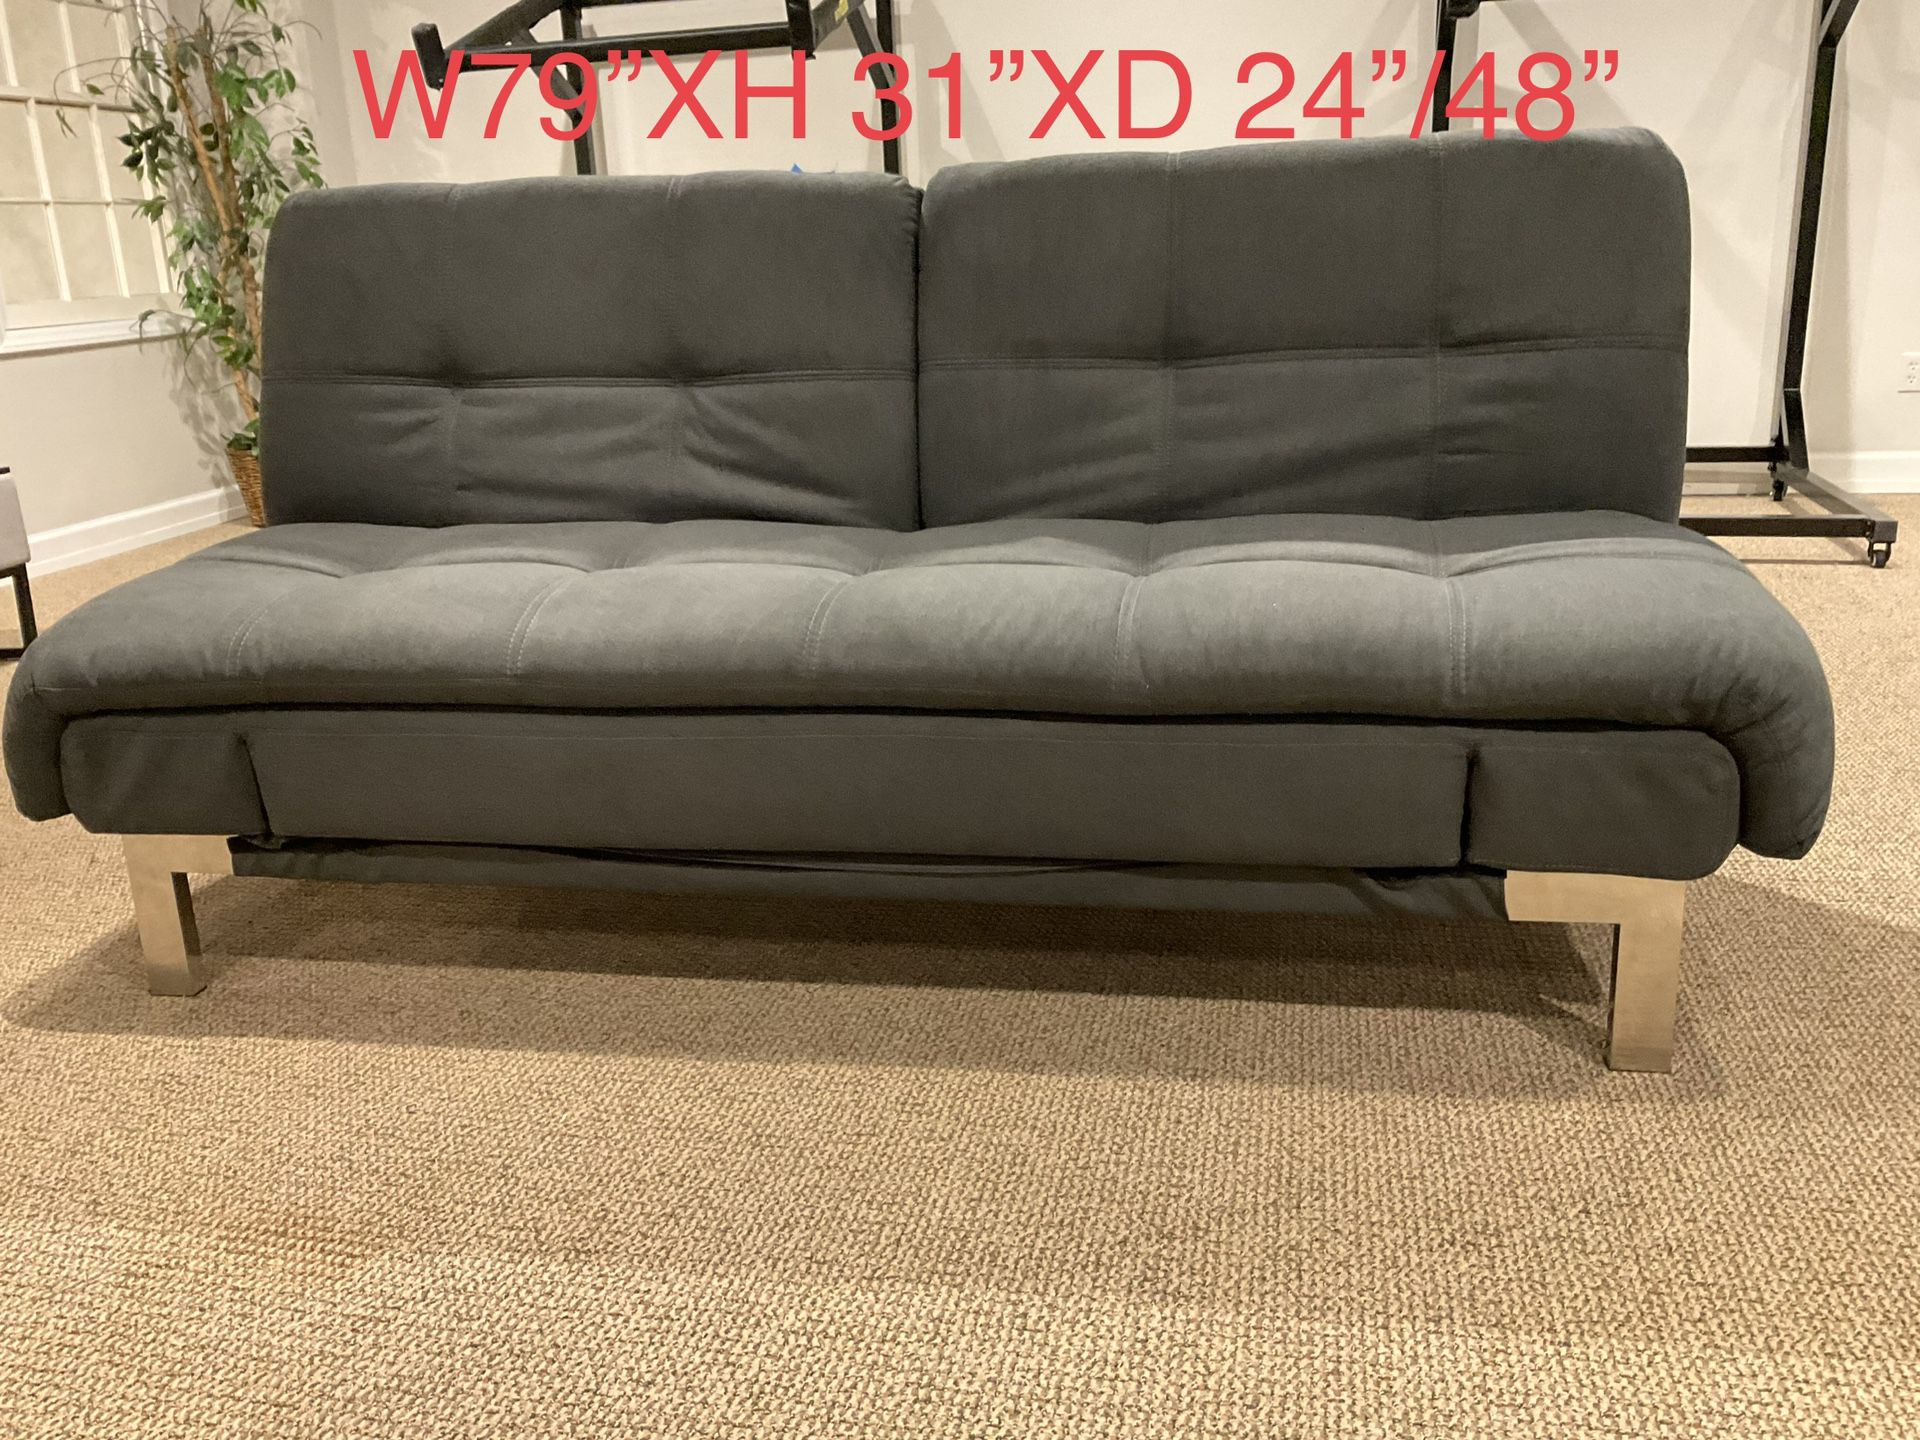 New Futon Sleeper Sofa Gray Fabric Upholstered